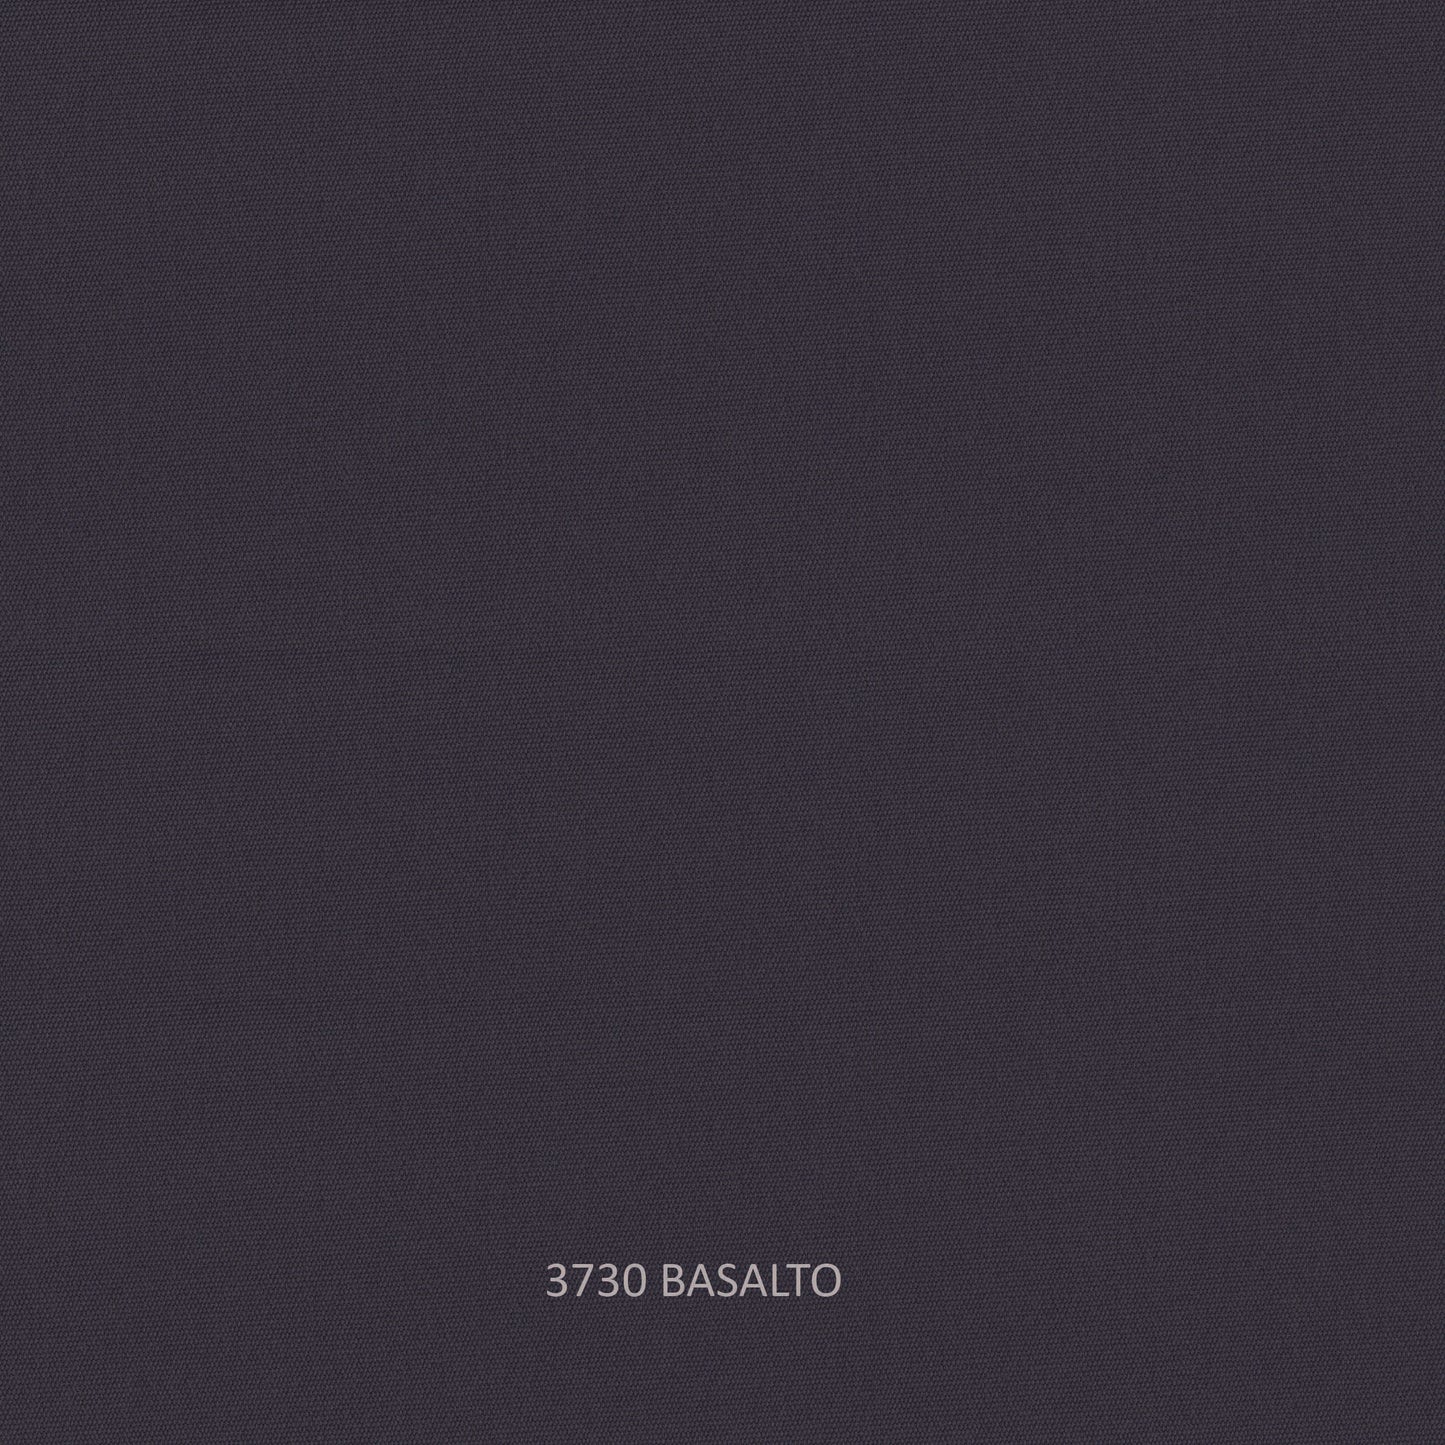 Brando Silver Walnut Sofa - PadioLiving - Brando Silver Walnut Sofa - Outdoor Sofa - Silver Walnut 10mm Weave - Basalto (£2886) - PadioLiving